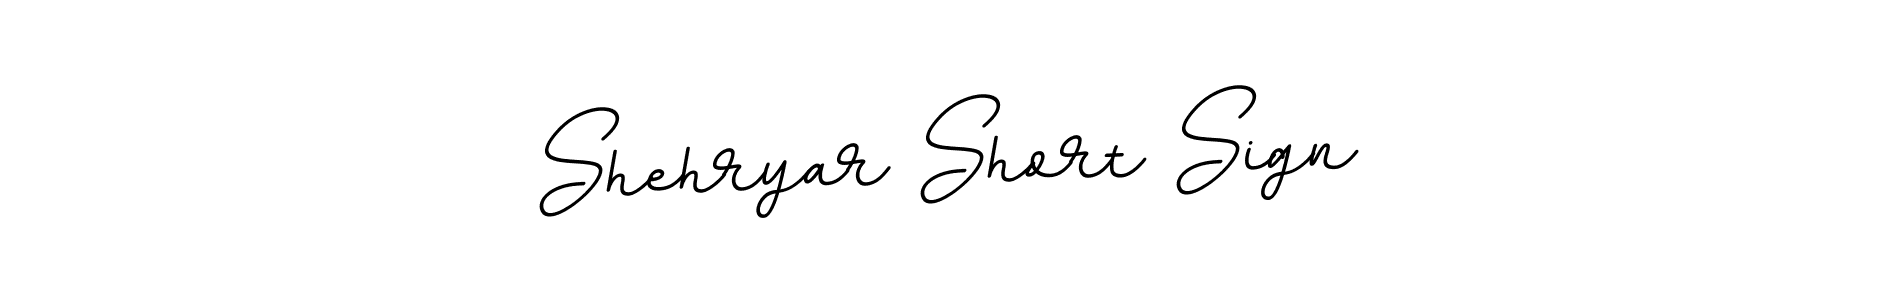 How to Draw Shehryar Short Sign signature style? BallpointsItalic-DORy9 is a latest design signature styles for name Shehryar Short Sign. Shehryar Short Sign signature style 11 images and pictures png